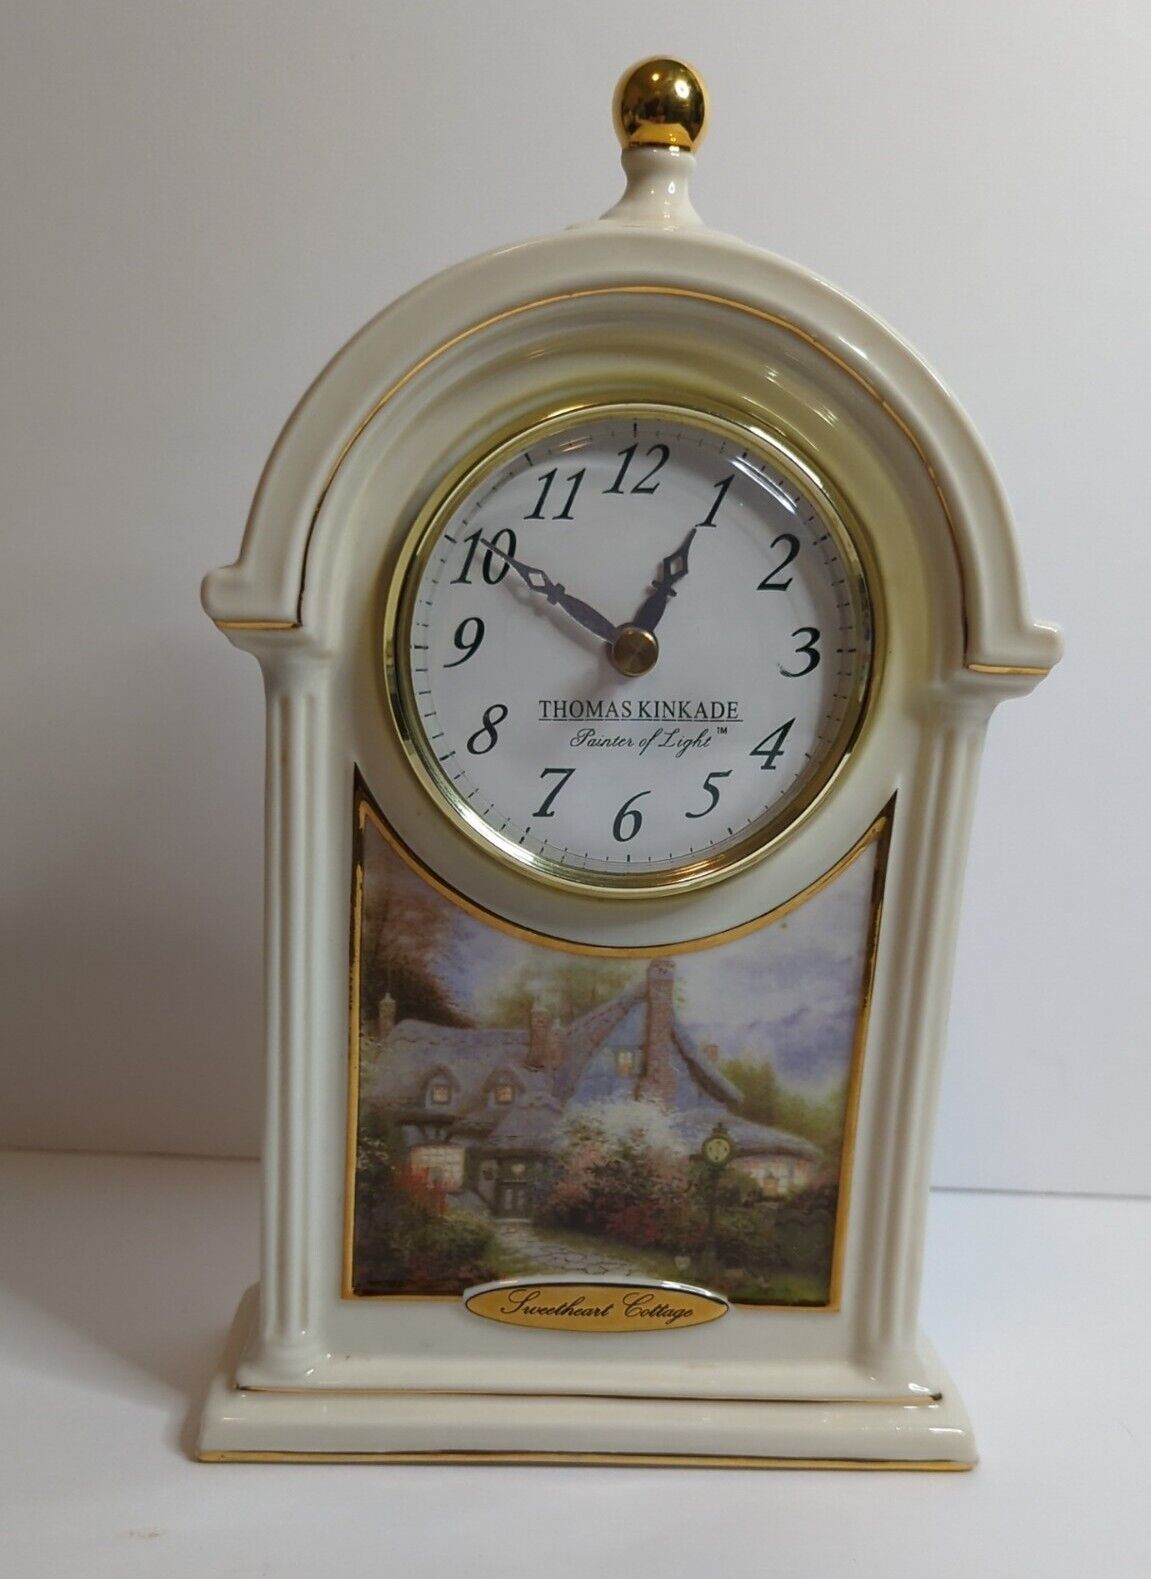 Thomas Kinkade Painter of Light Sweetheart Cottage Mantel Clock